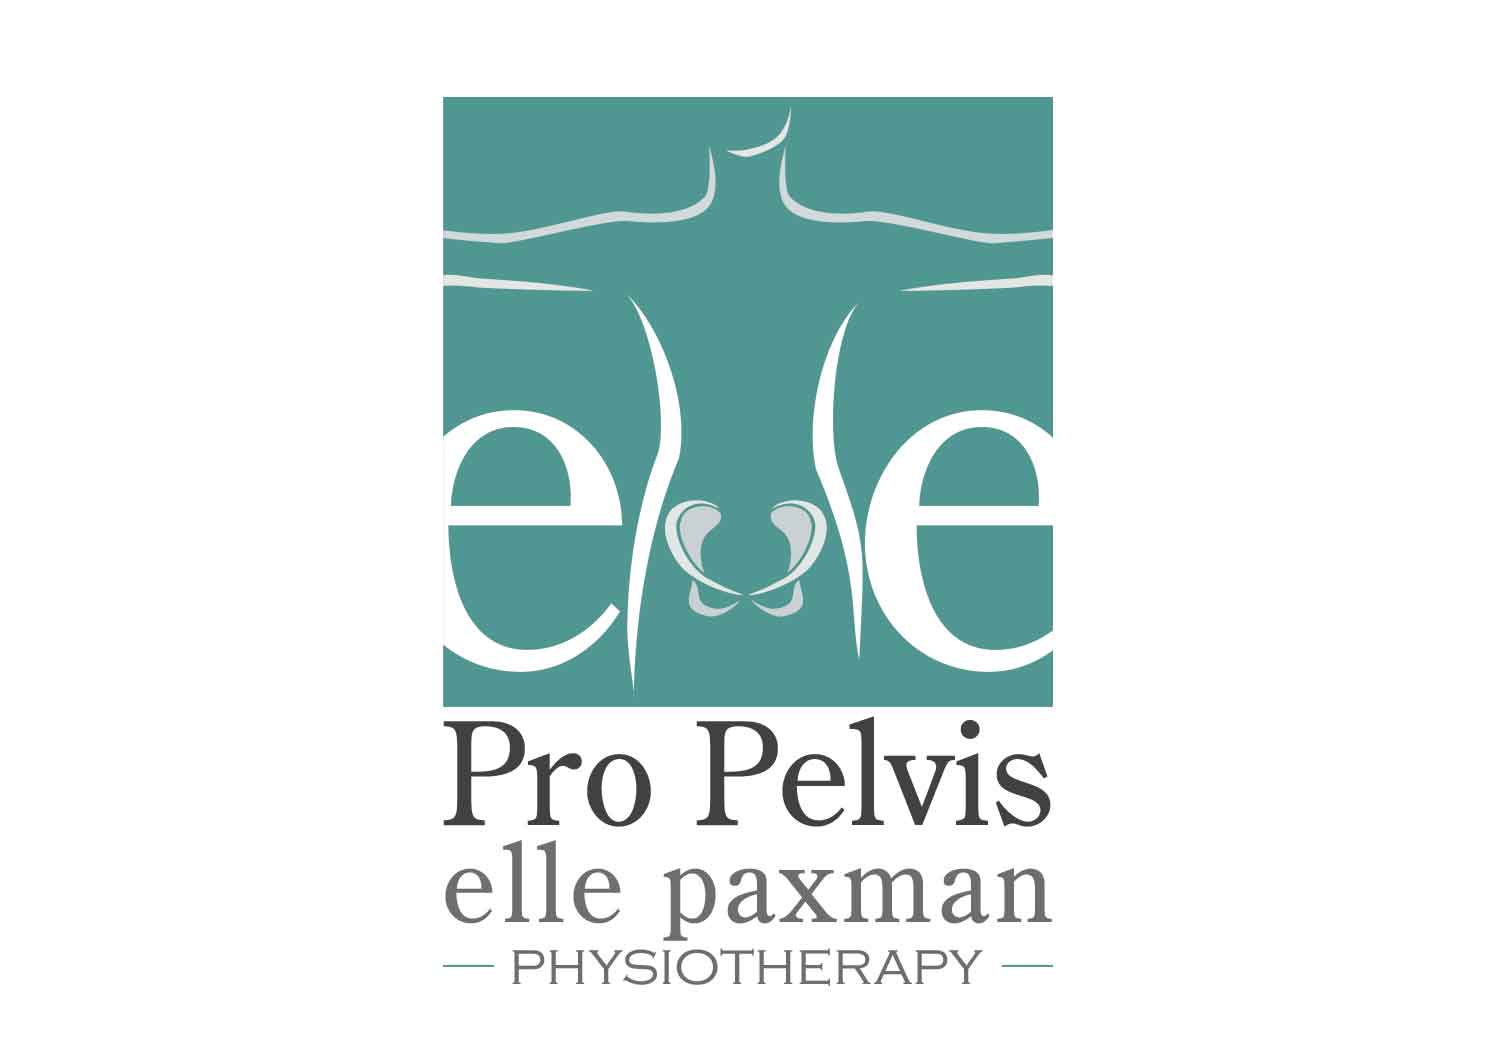 Pro Pelvis logo design